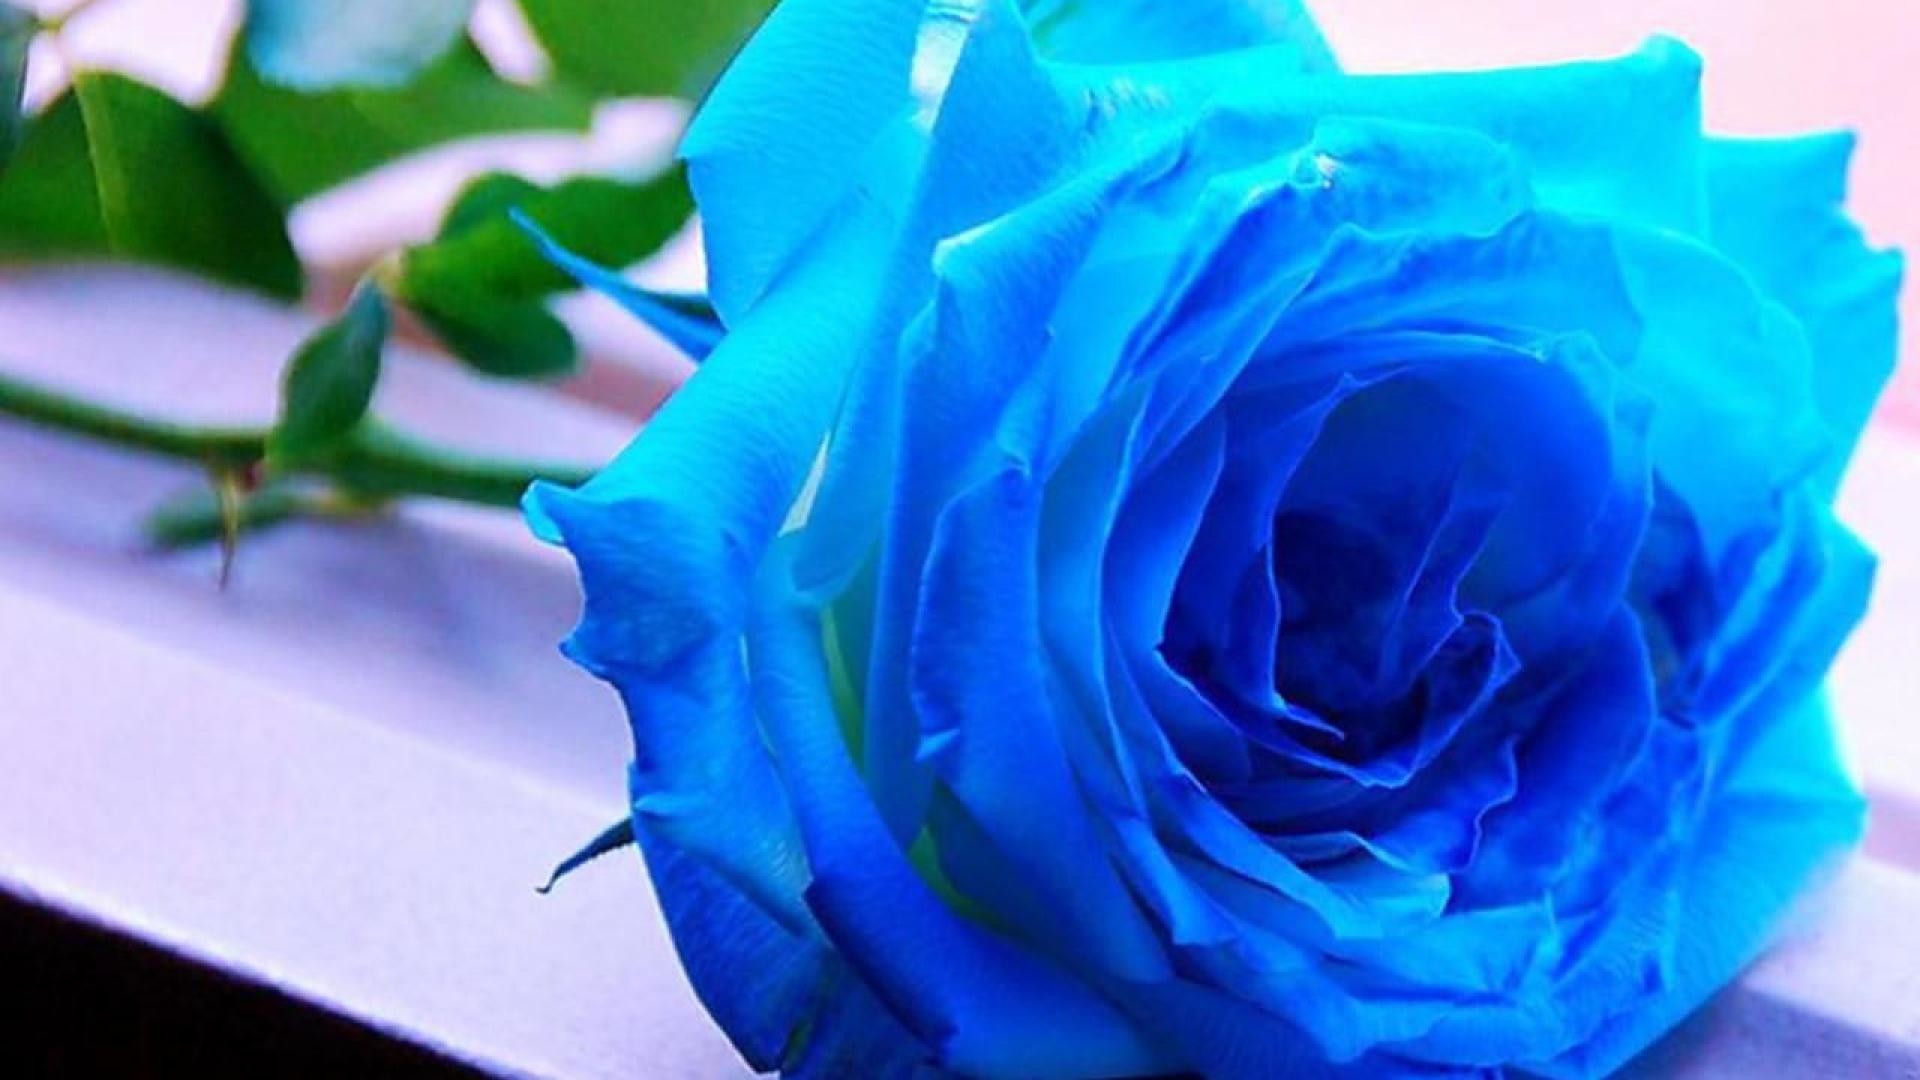 Blue Roses Wallpaper (58+ images)